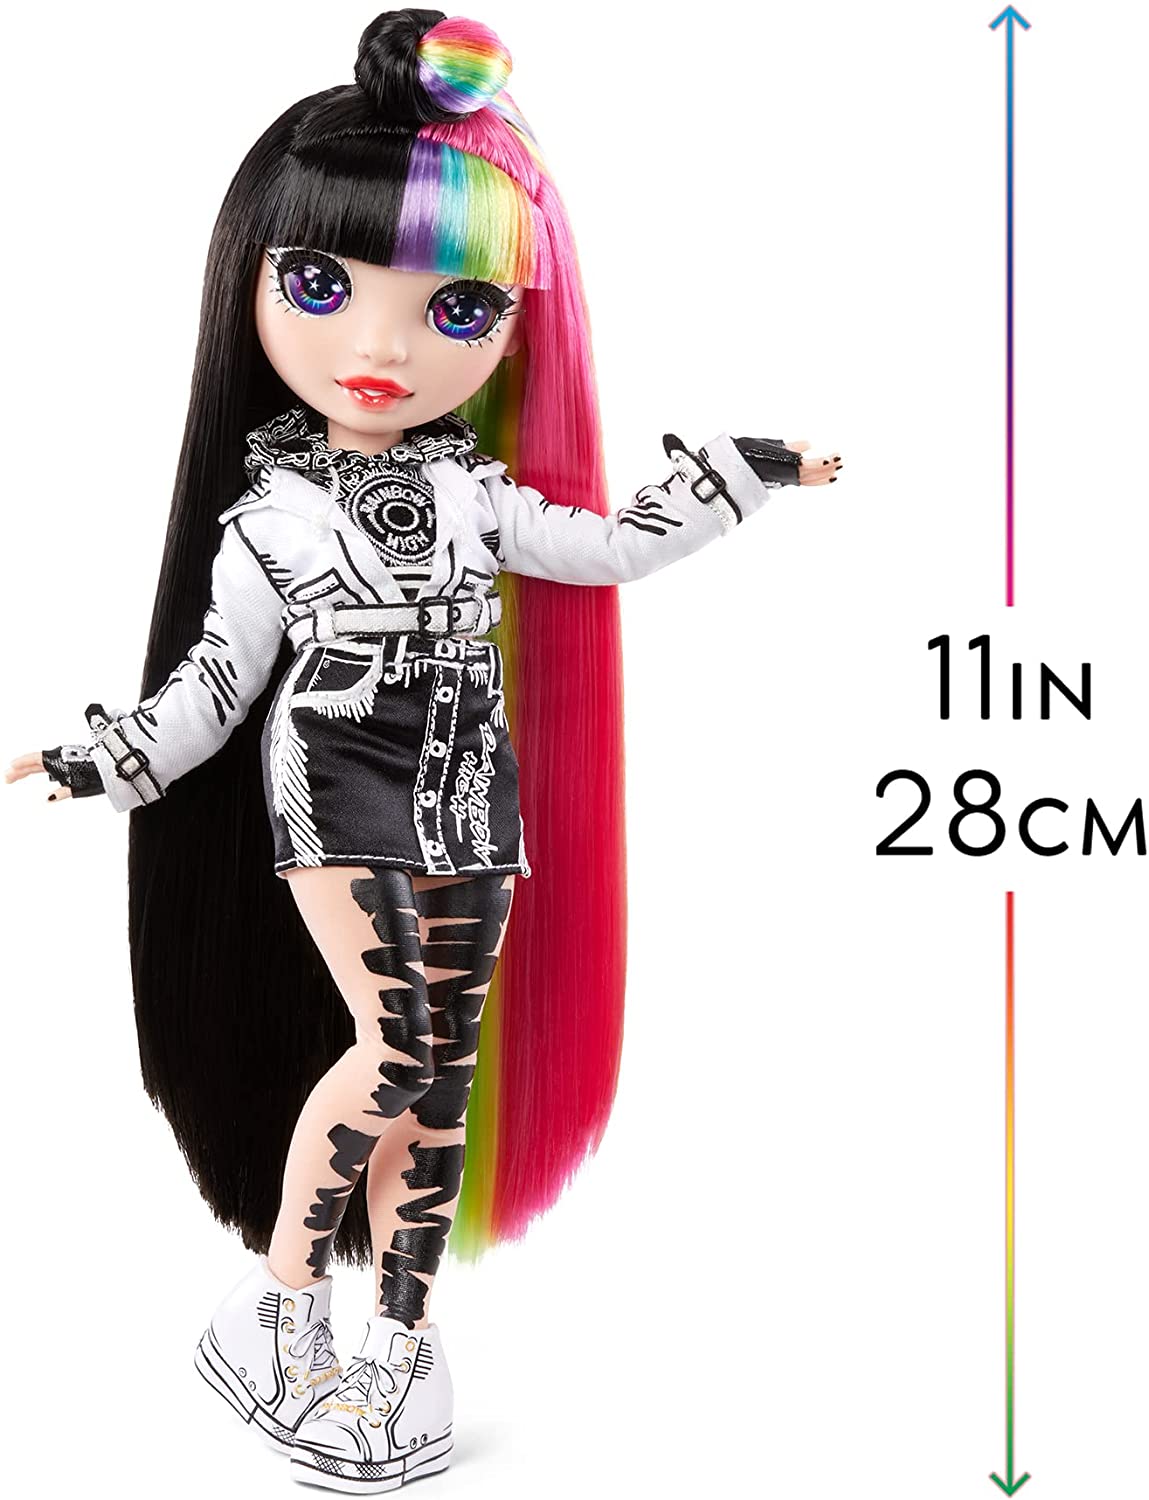 Rainbow High 576761EUC - Boneca da moda JETT Dawson com cabelo multicolorido